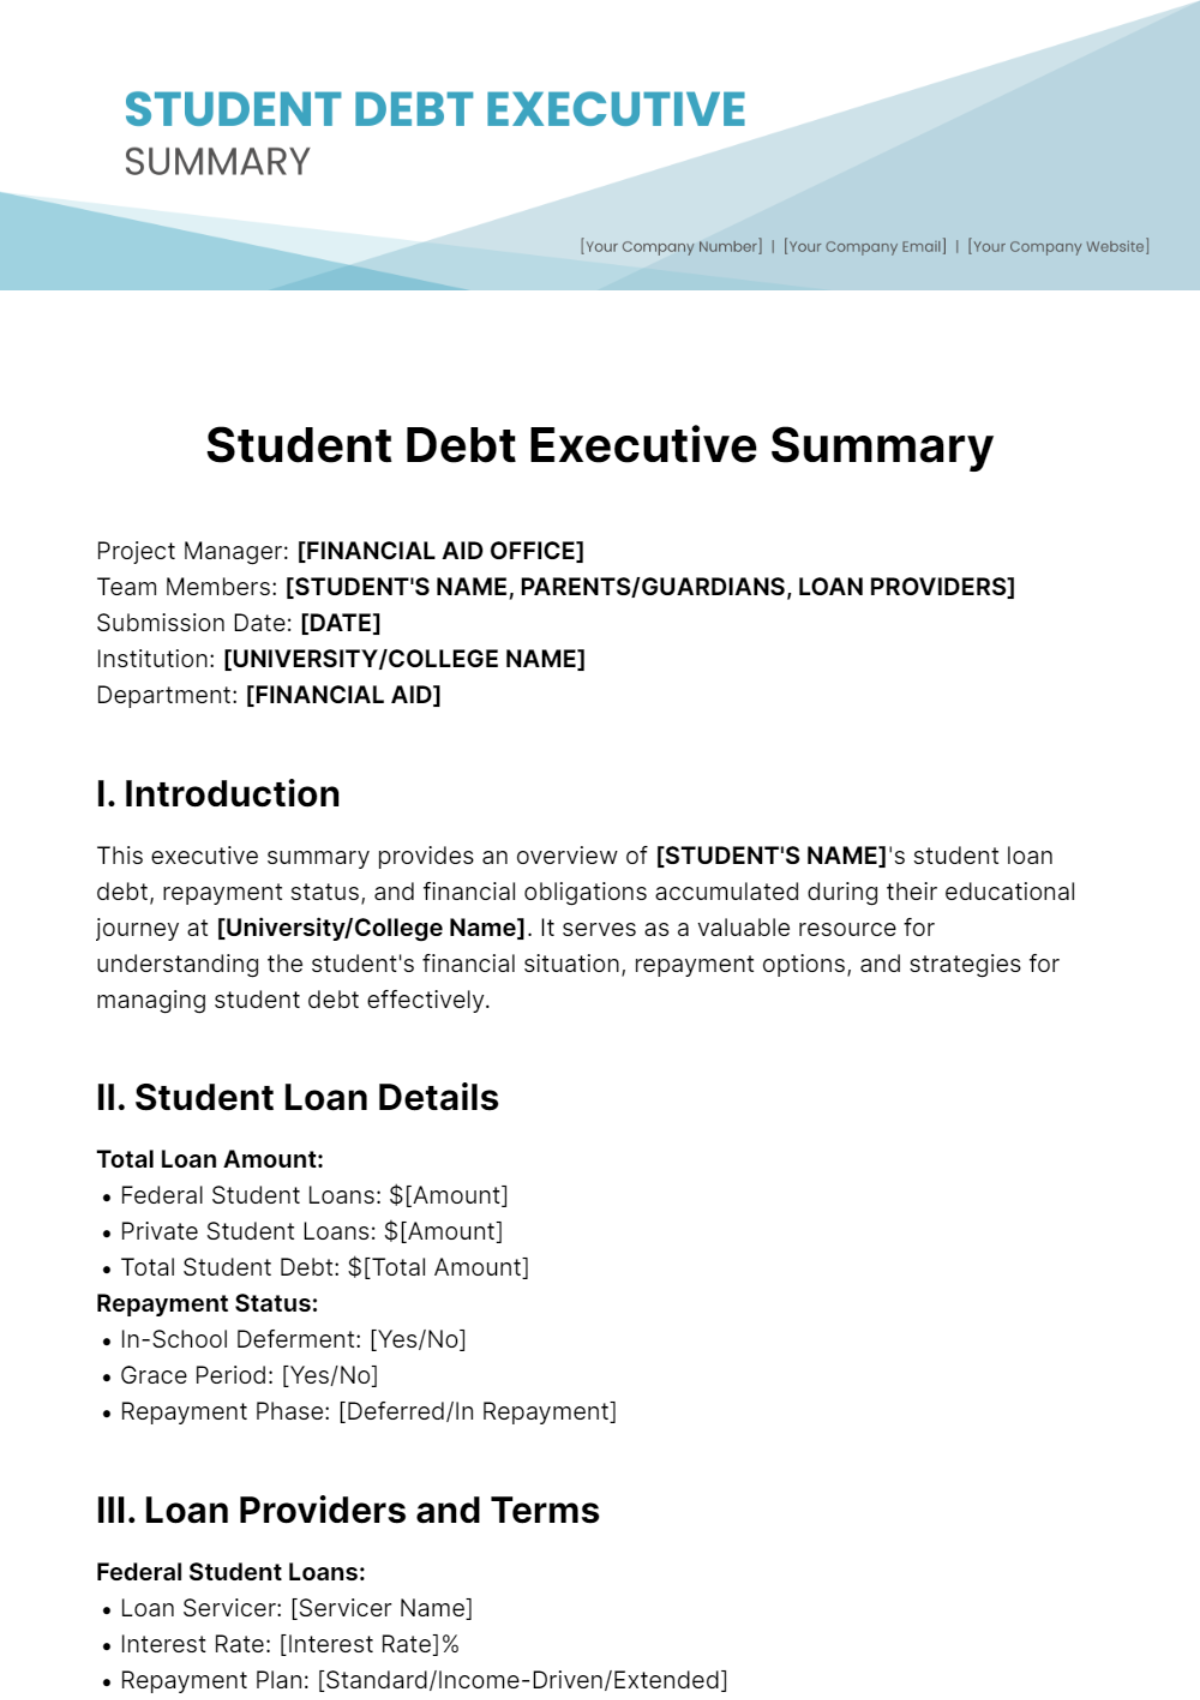 Student Debt Executive Summary Template